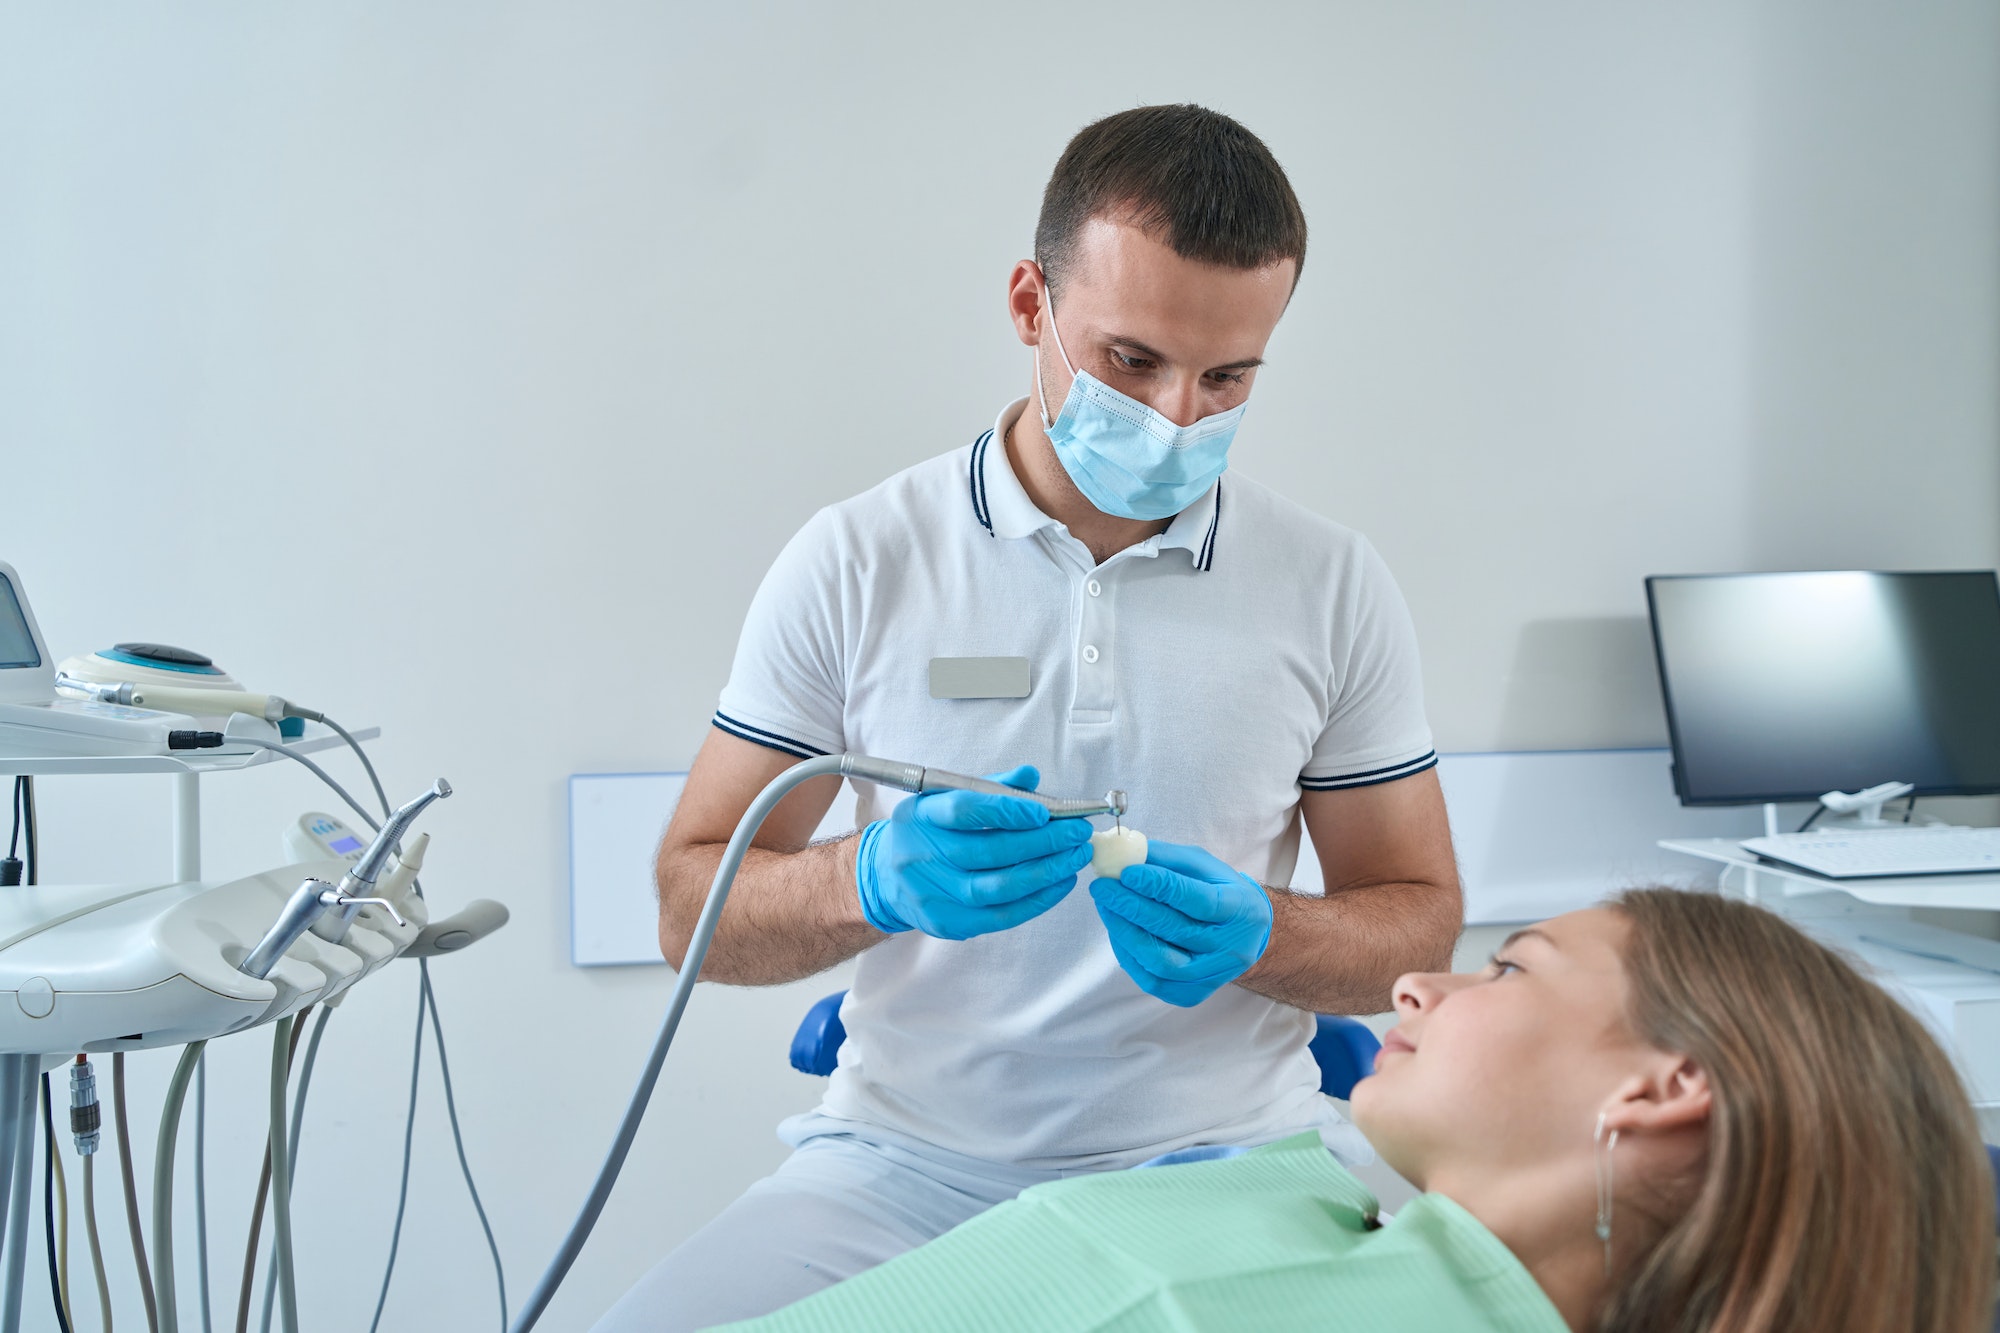 Serious focused pedodontist performing tooth restoration procedure